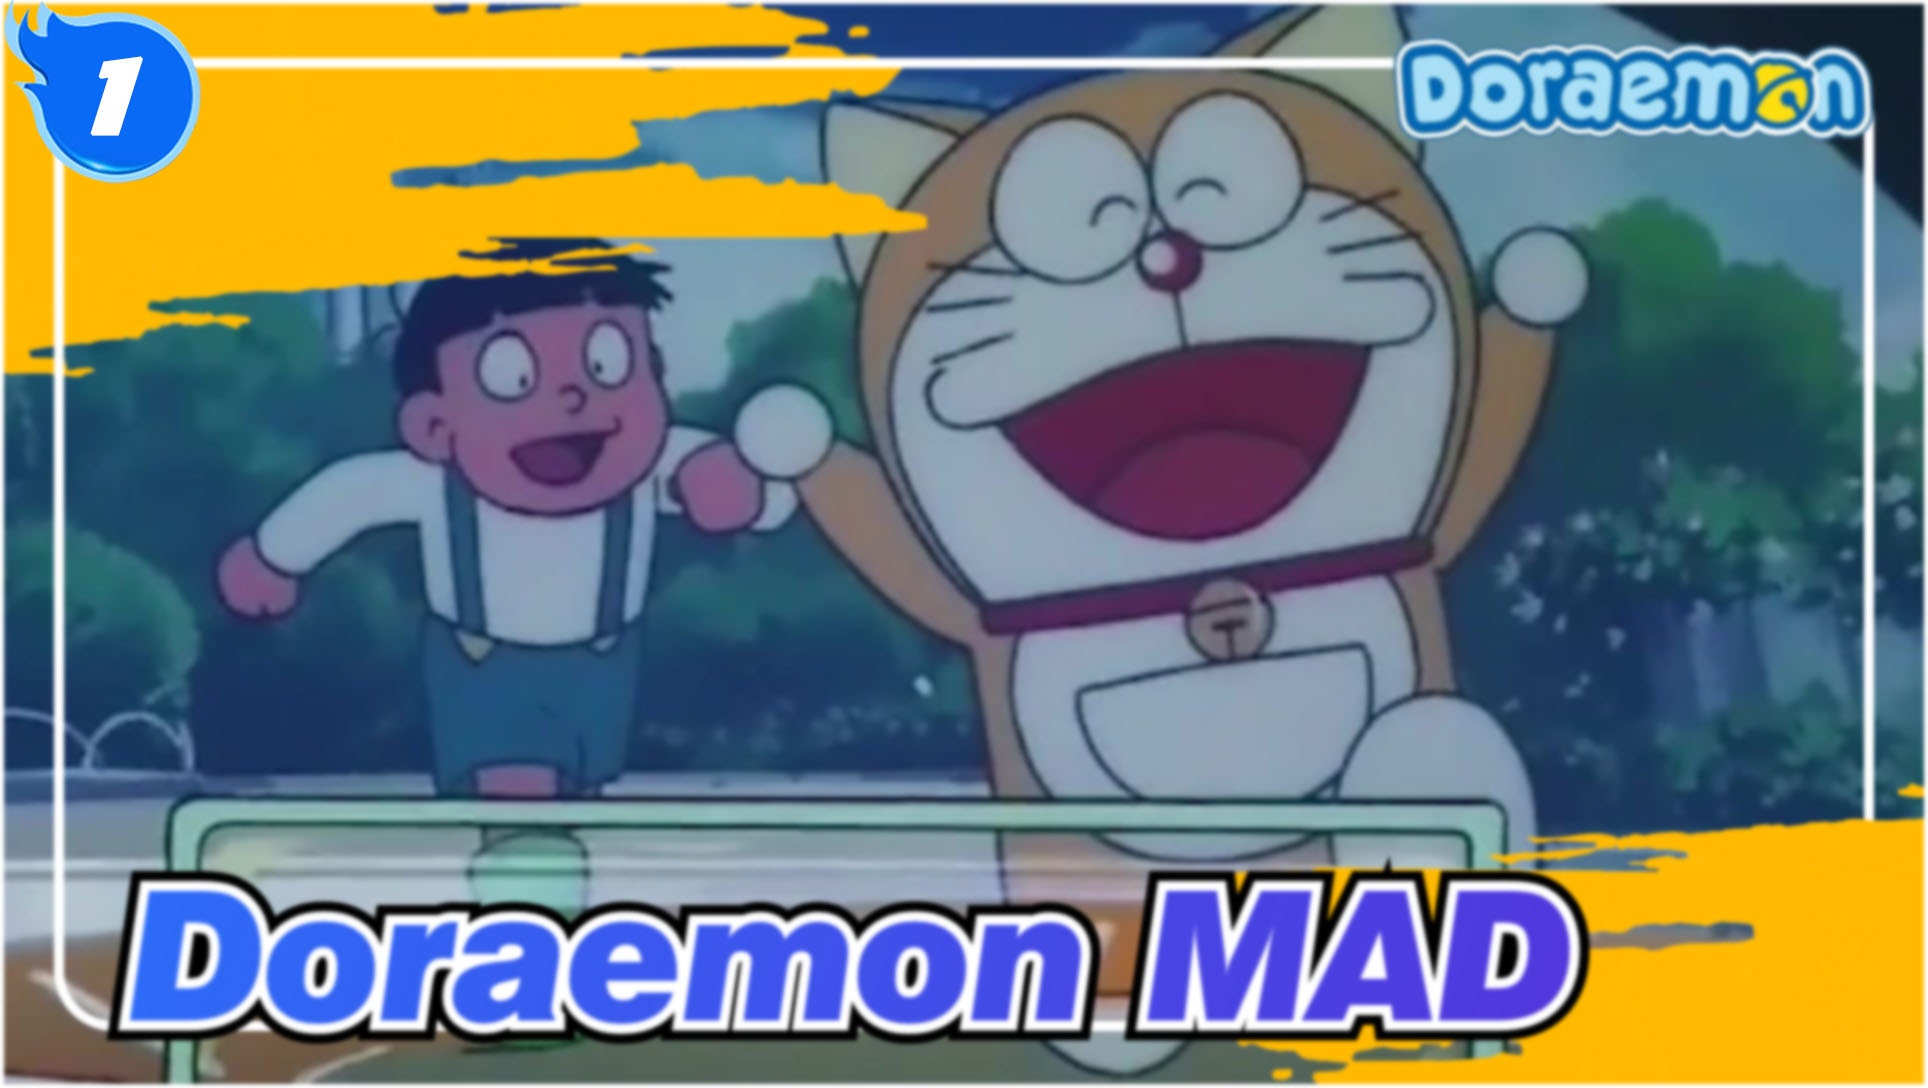 Doraemon/MAD]The birth of Doraemon_1 - Bilibili